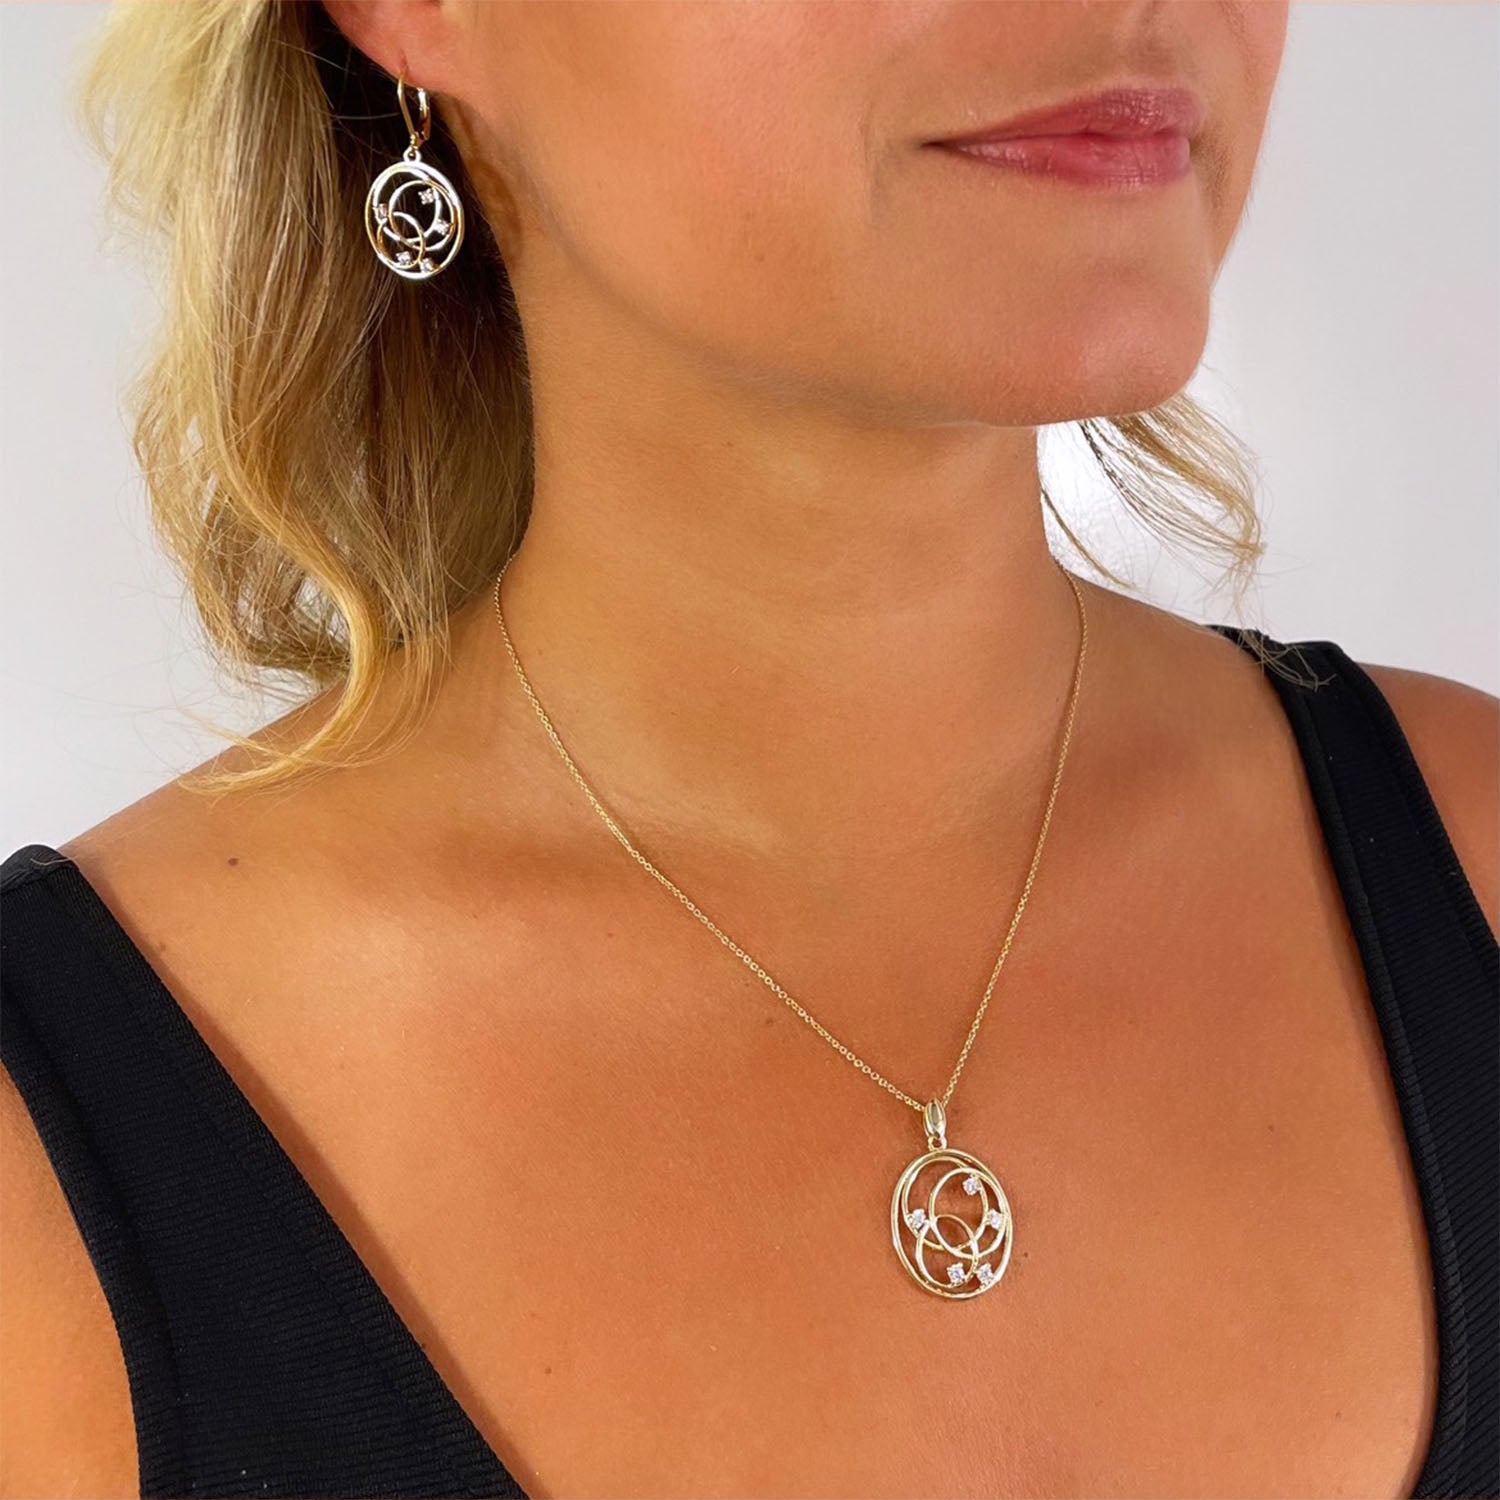 Aura CZ Diamond Circle Drop Earrings, Gold - Zahra Jewelry